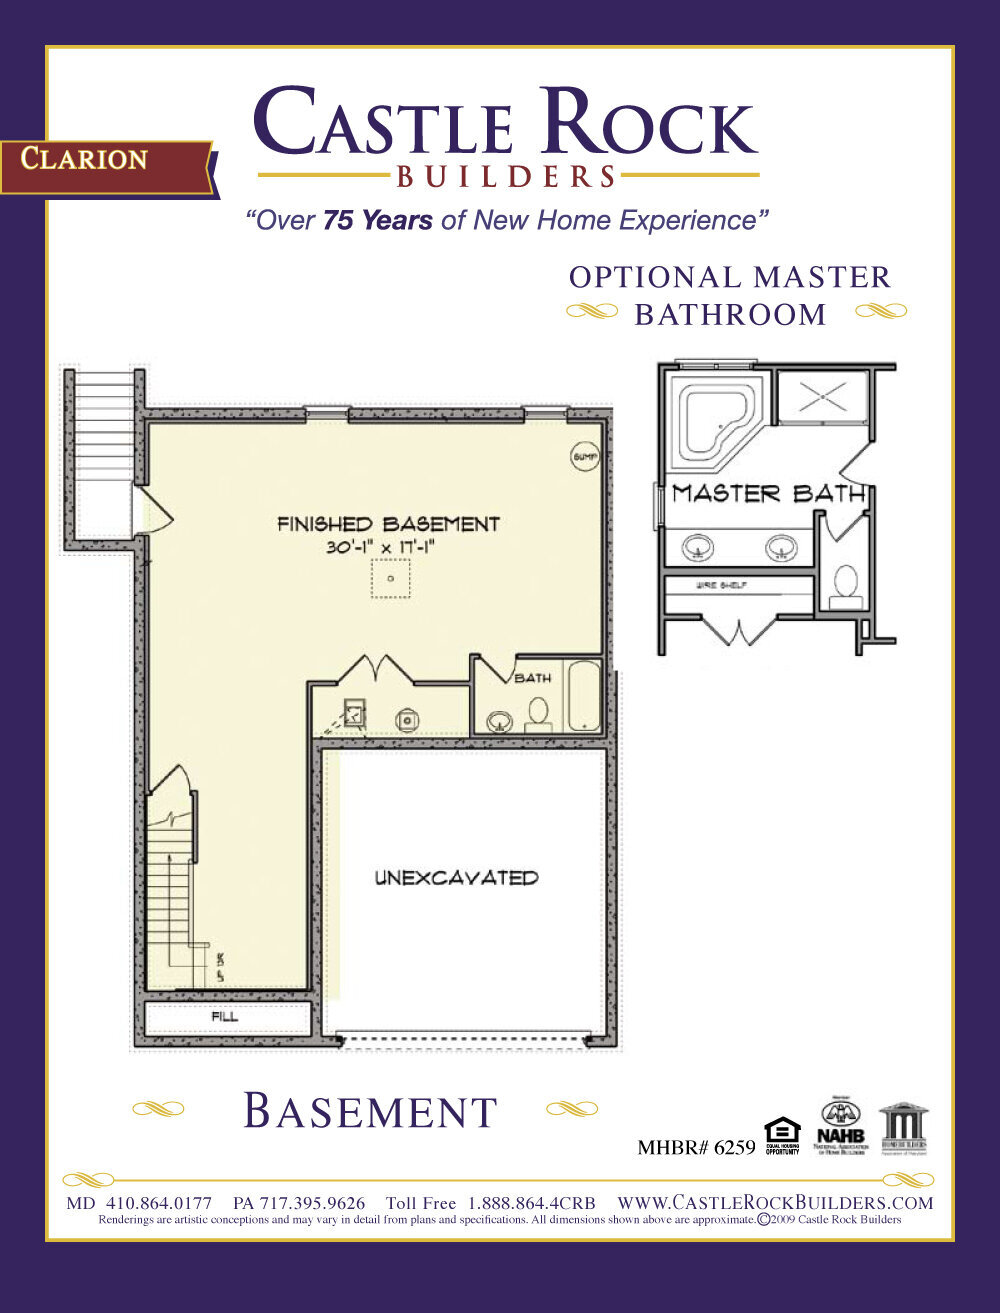 Clarion builders plan basement